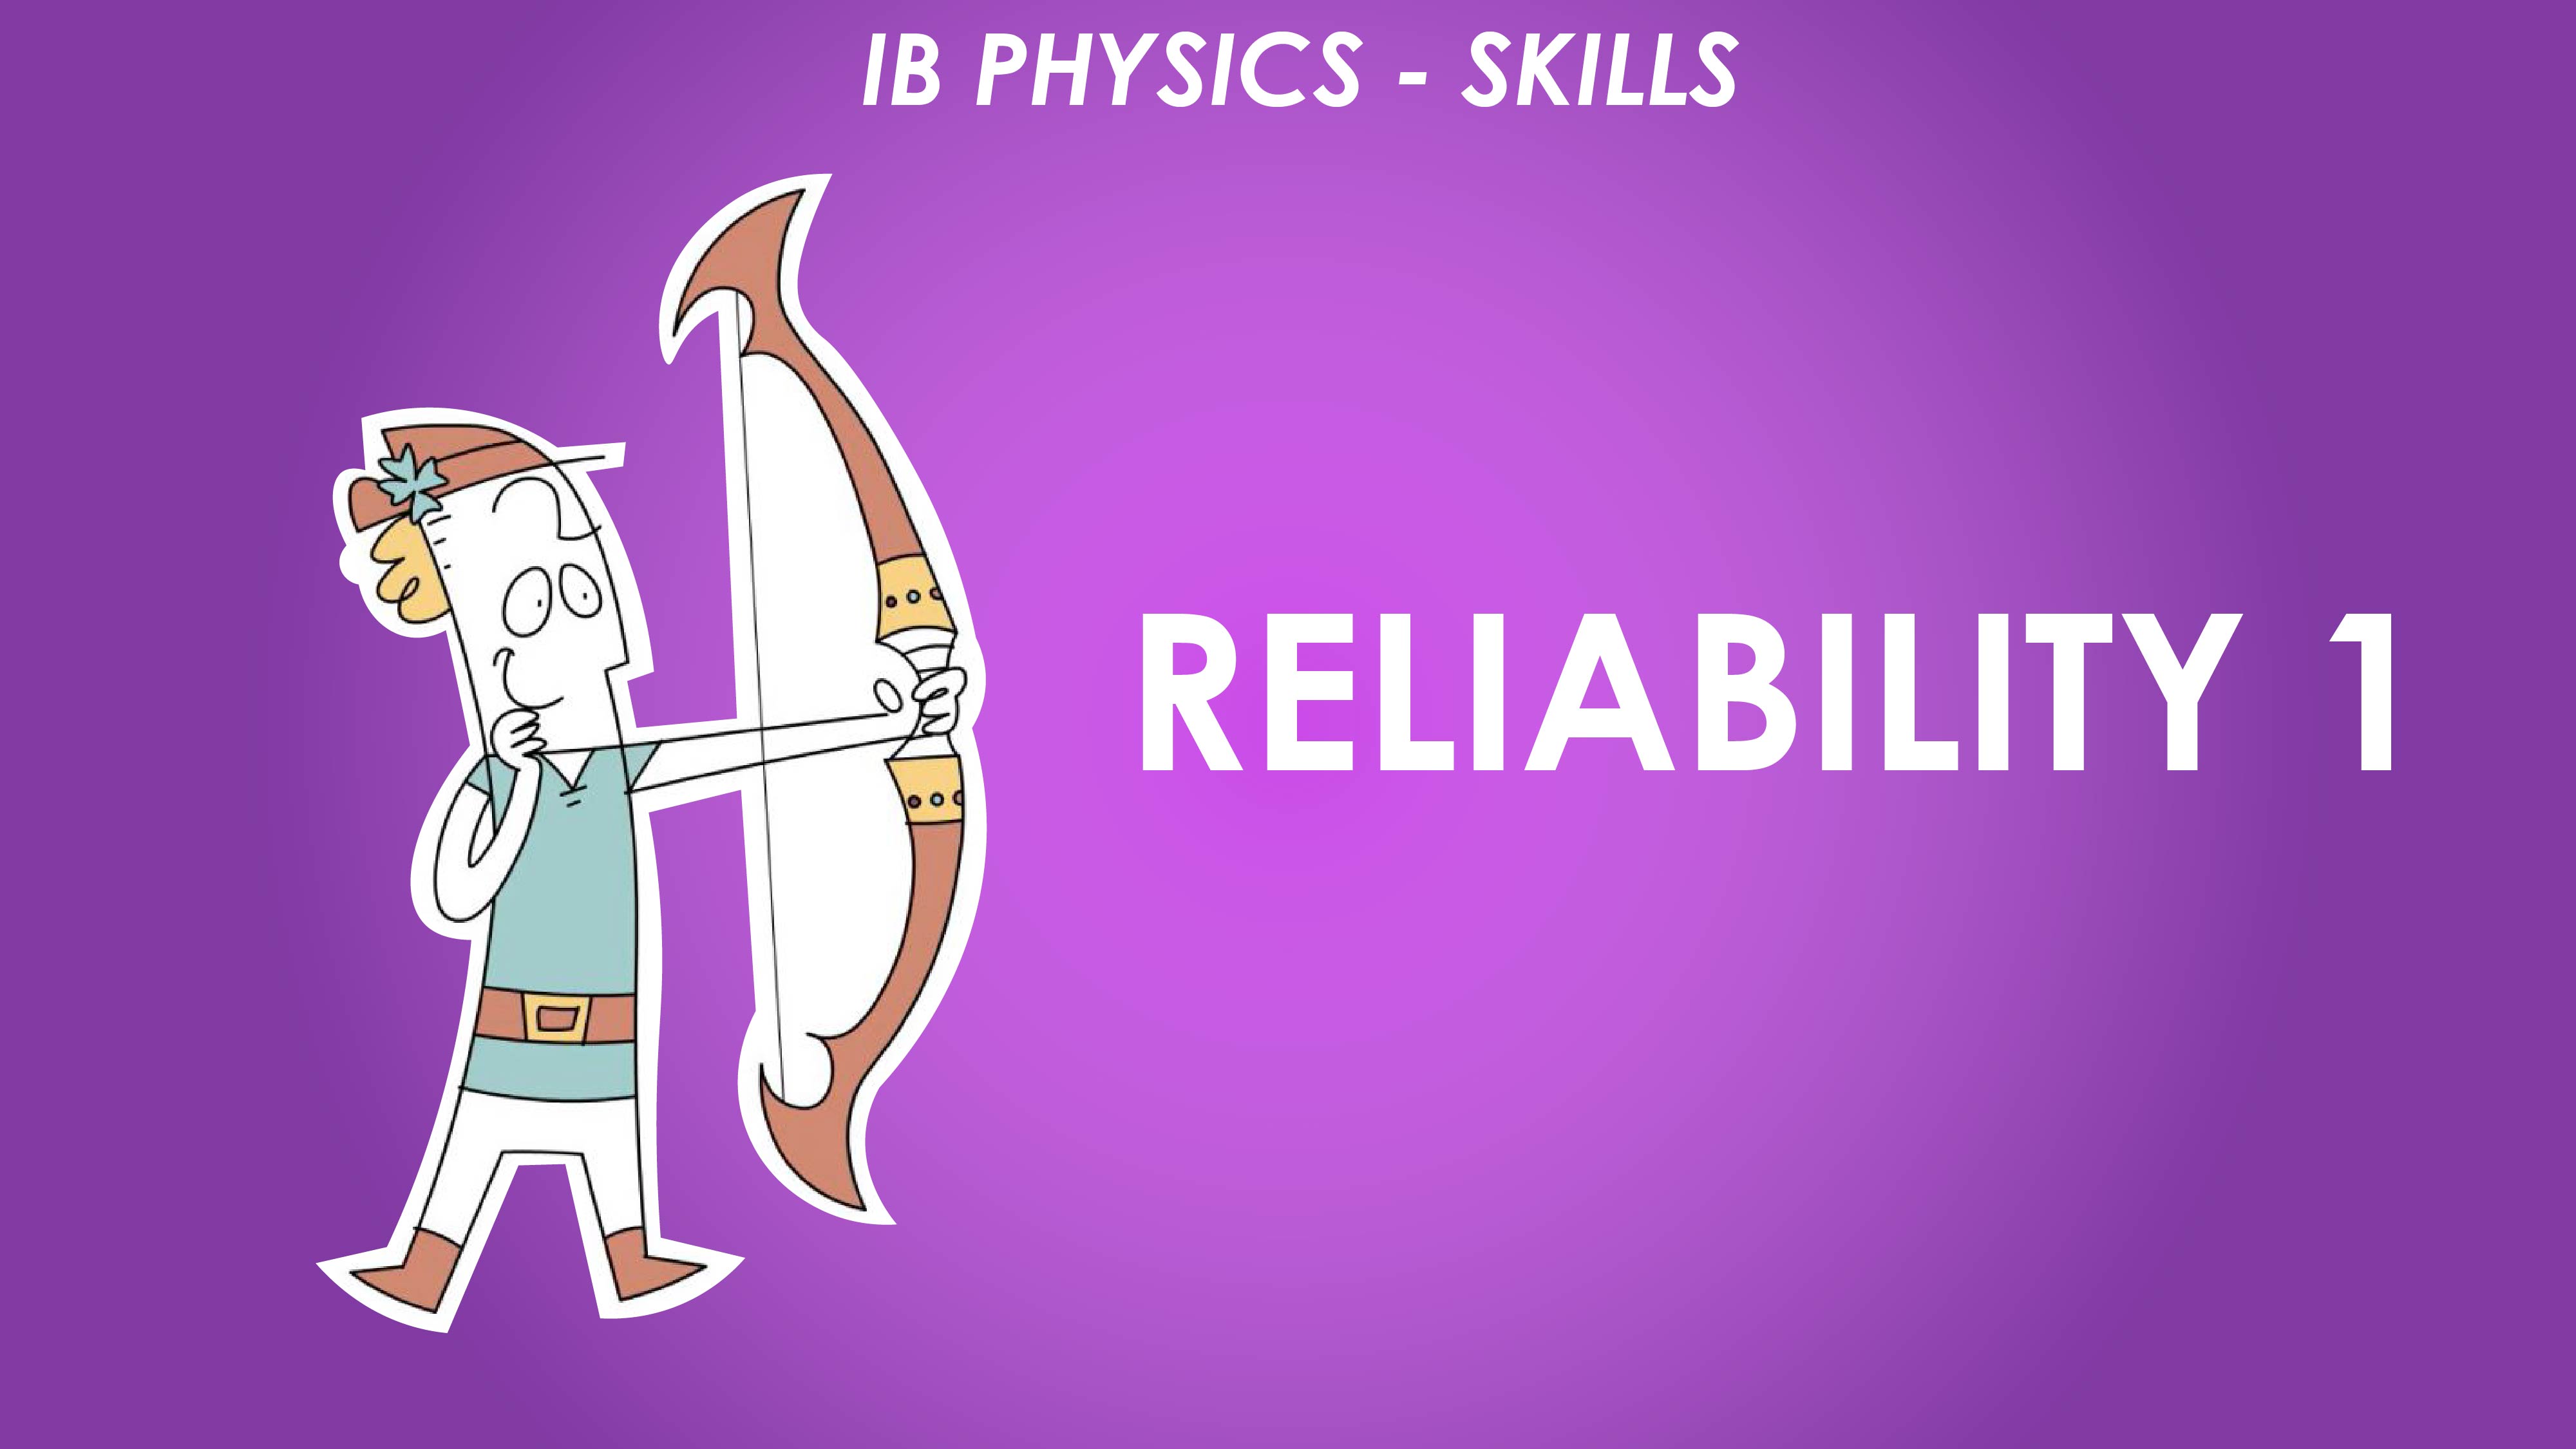 Reliability 1 - IB Physics Skills	